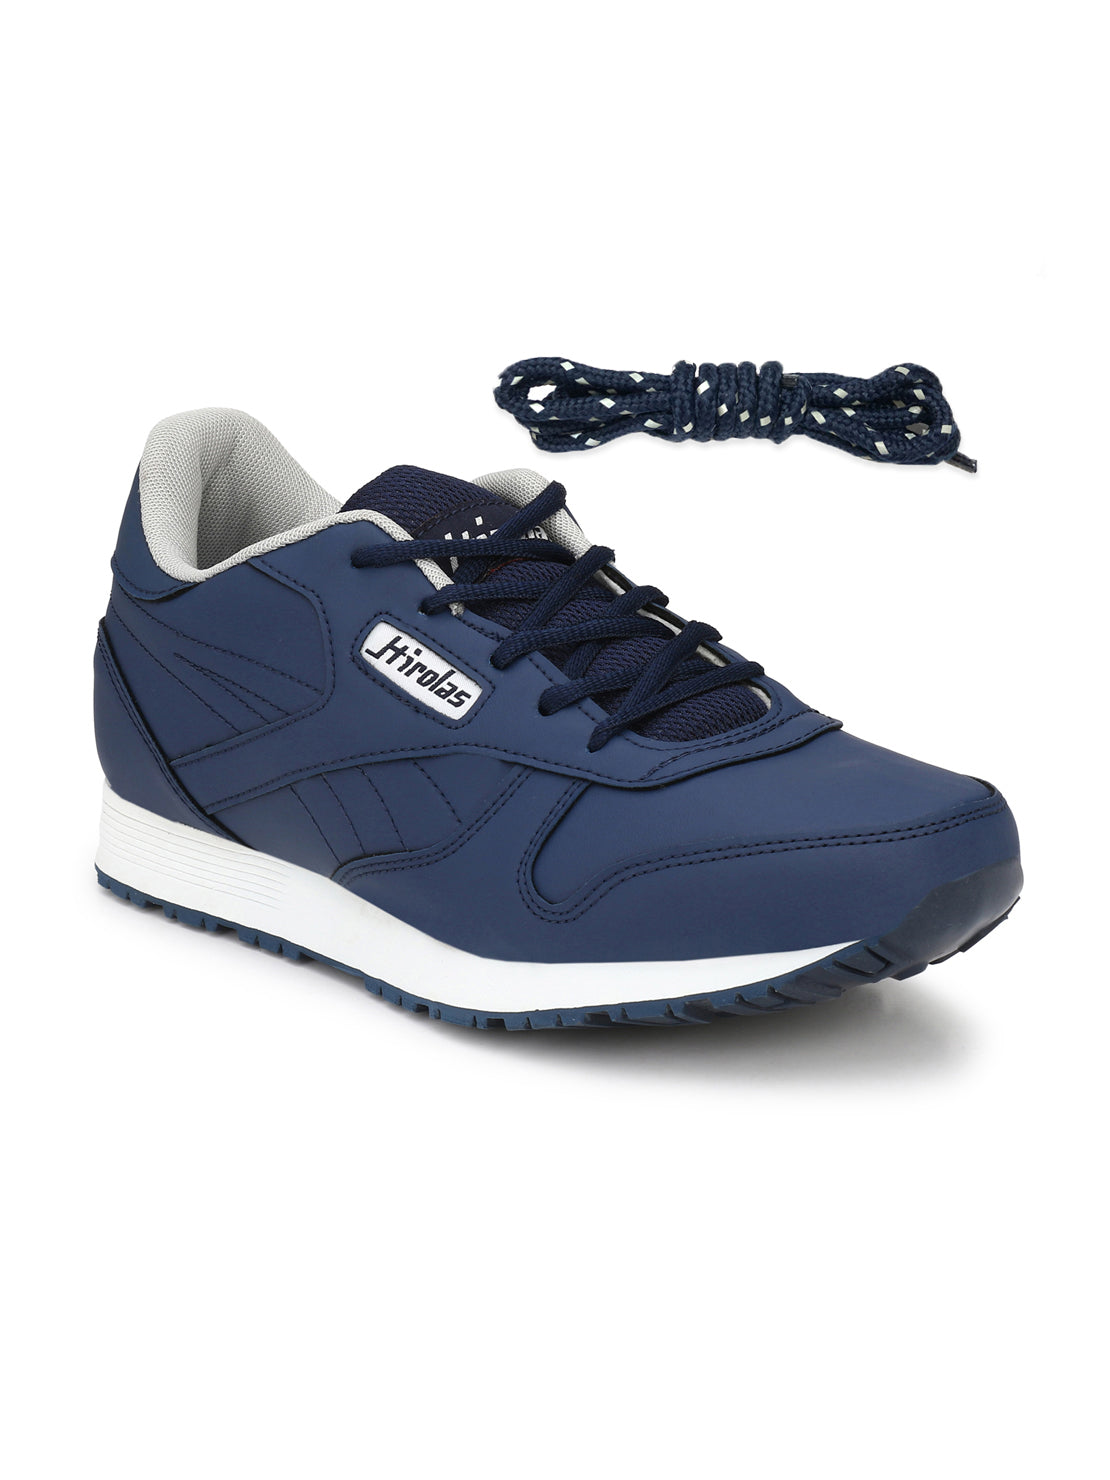 Hirolas® Men's Multisports Shock Absorbing Walking Running Fitness Athletic Training Gym Blue Lace Up Sneaker Sport Shoes (HRL2001B)